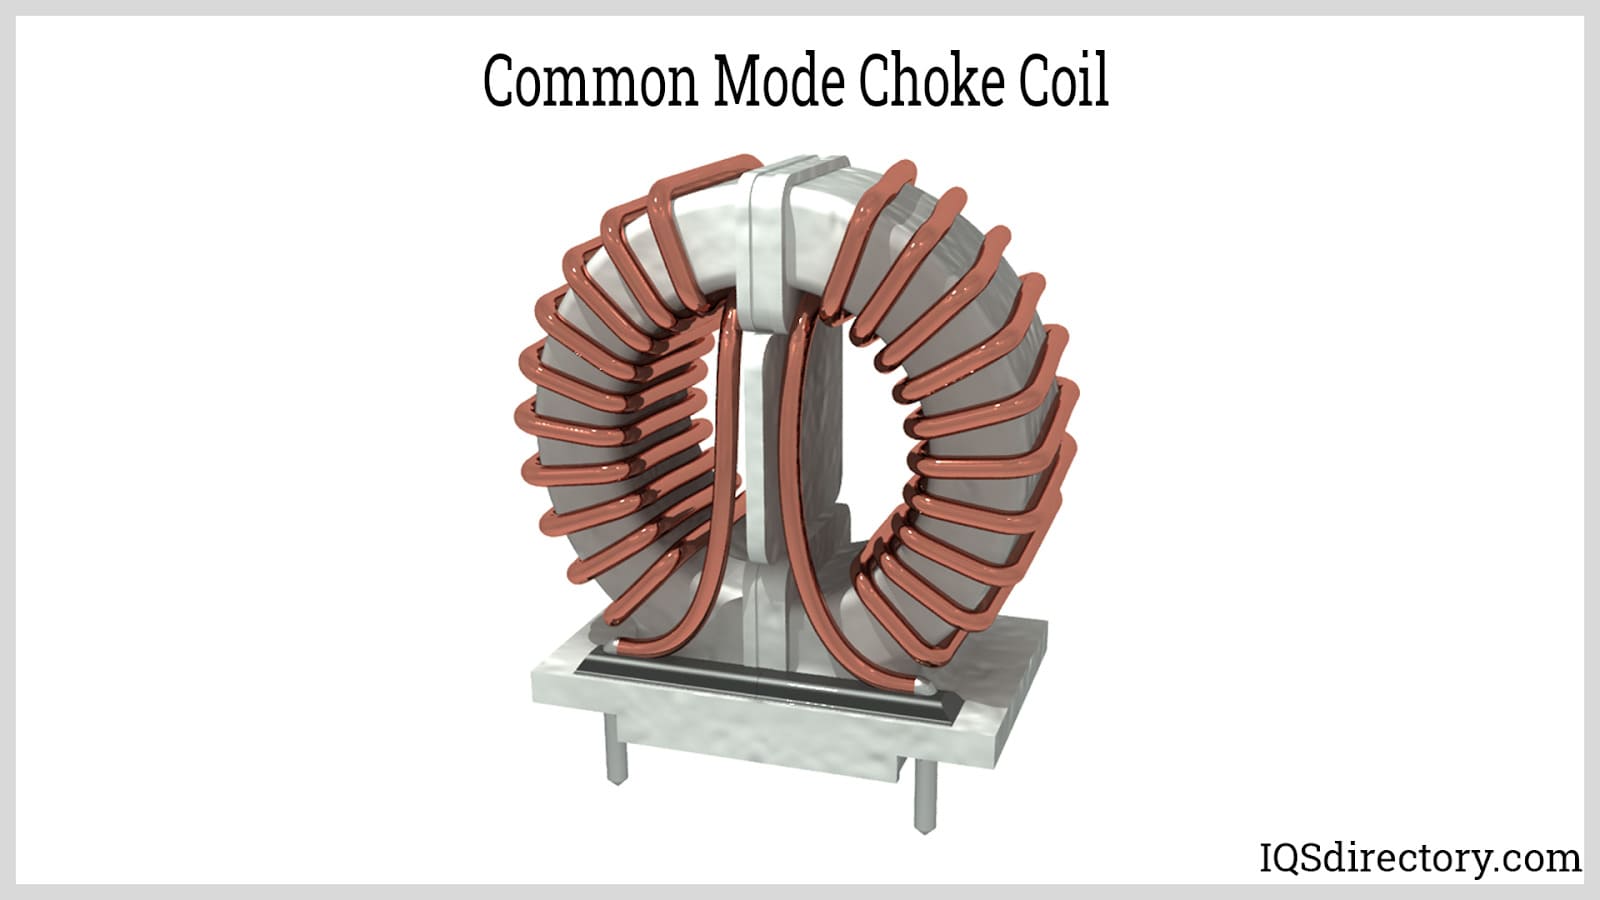 https://www.electriccoils.net/wp-content/uploads/2022/11/common-mode-choke-coil.jpg